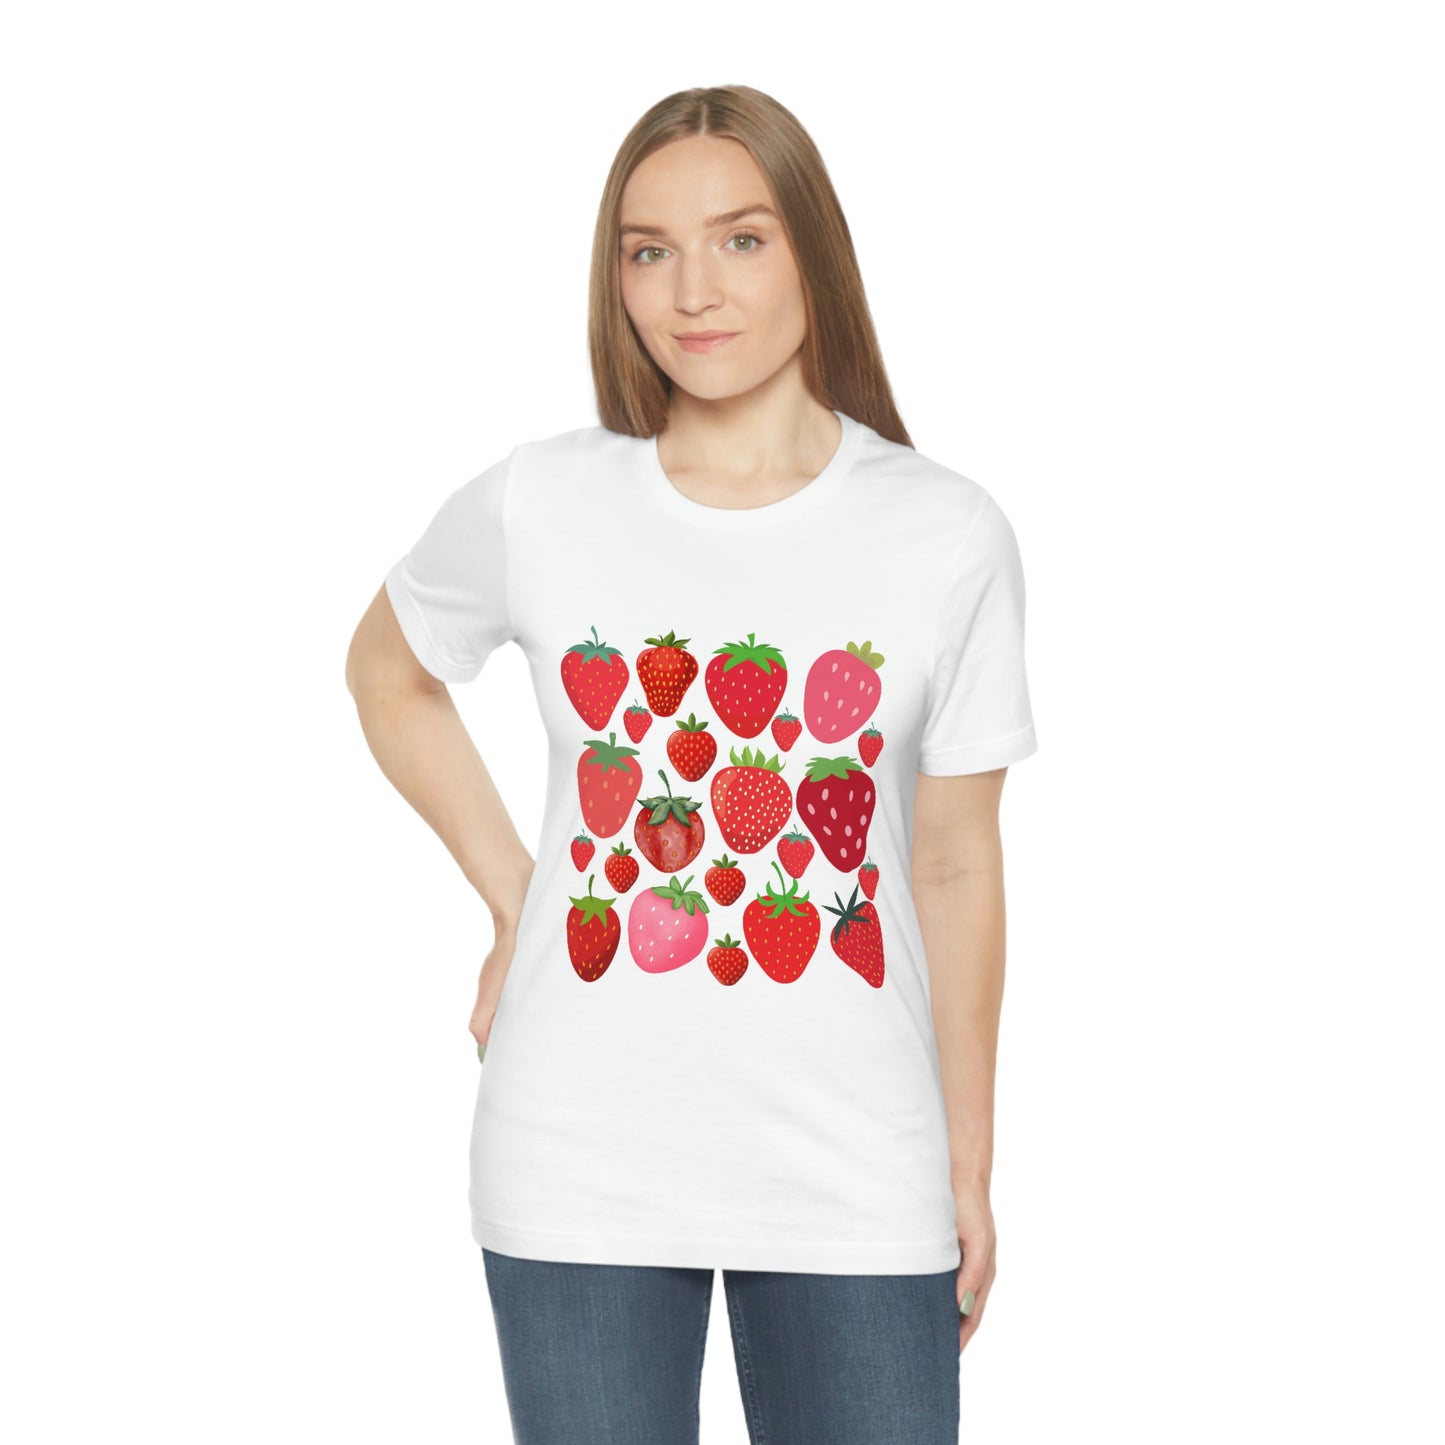 Strawberry Tshirt | Strawberry Shirt | Garden Shirt | Short Sleeved T-Shirt